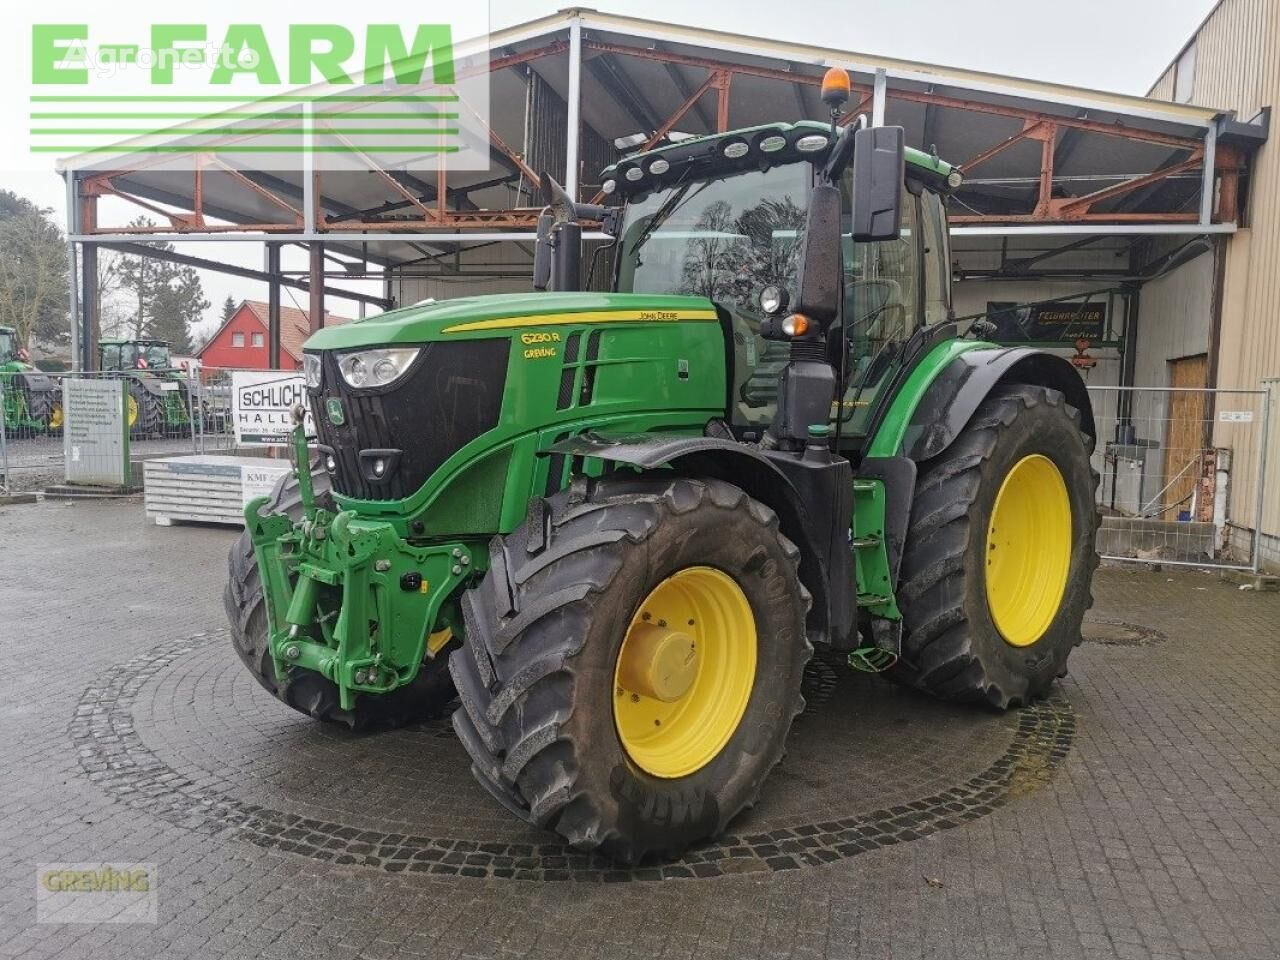 6230r wheel tractor